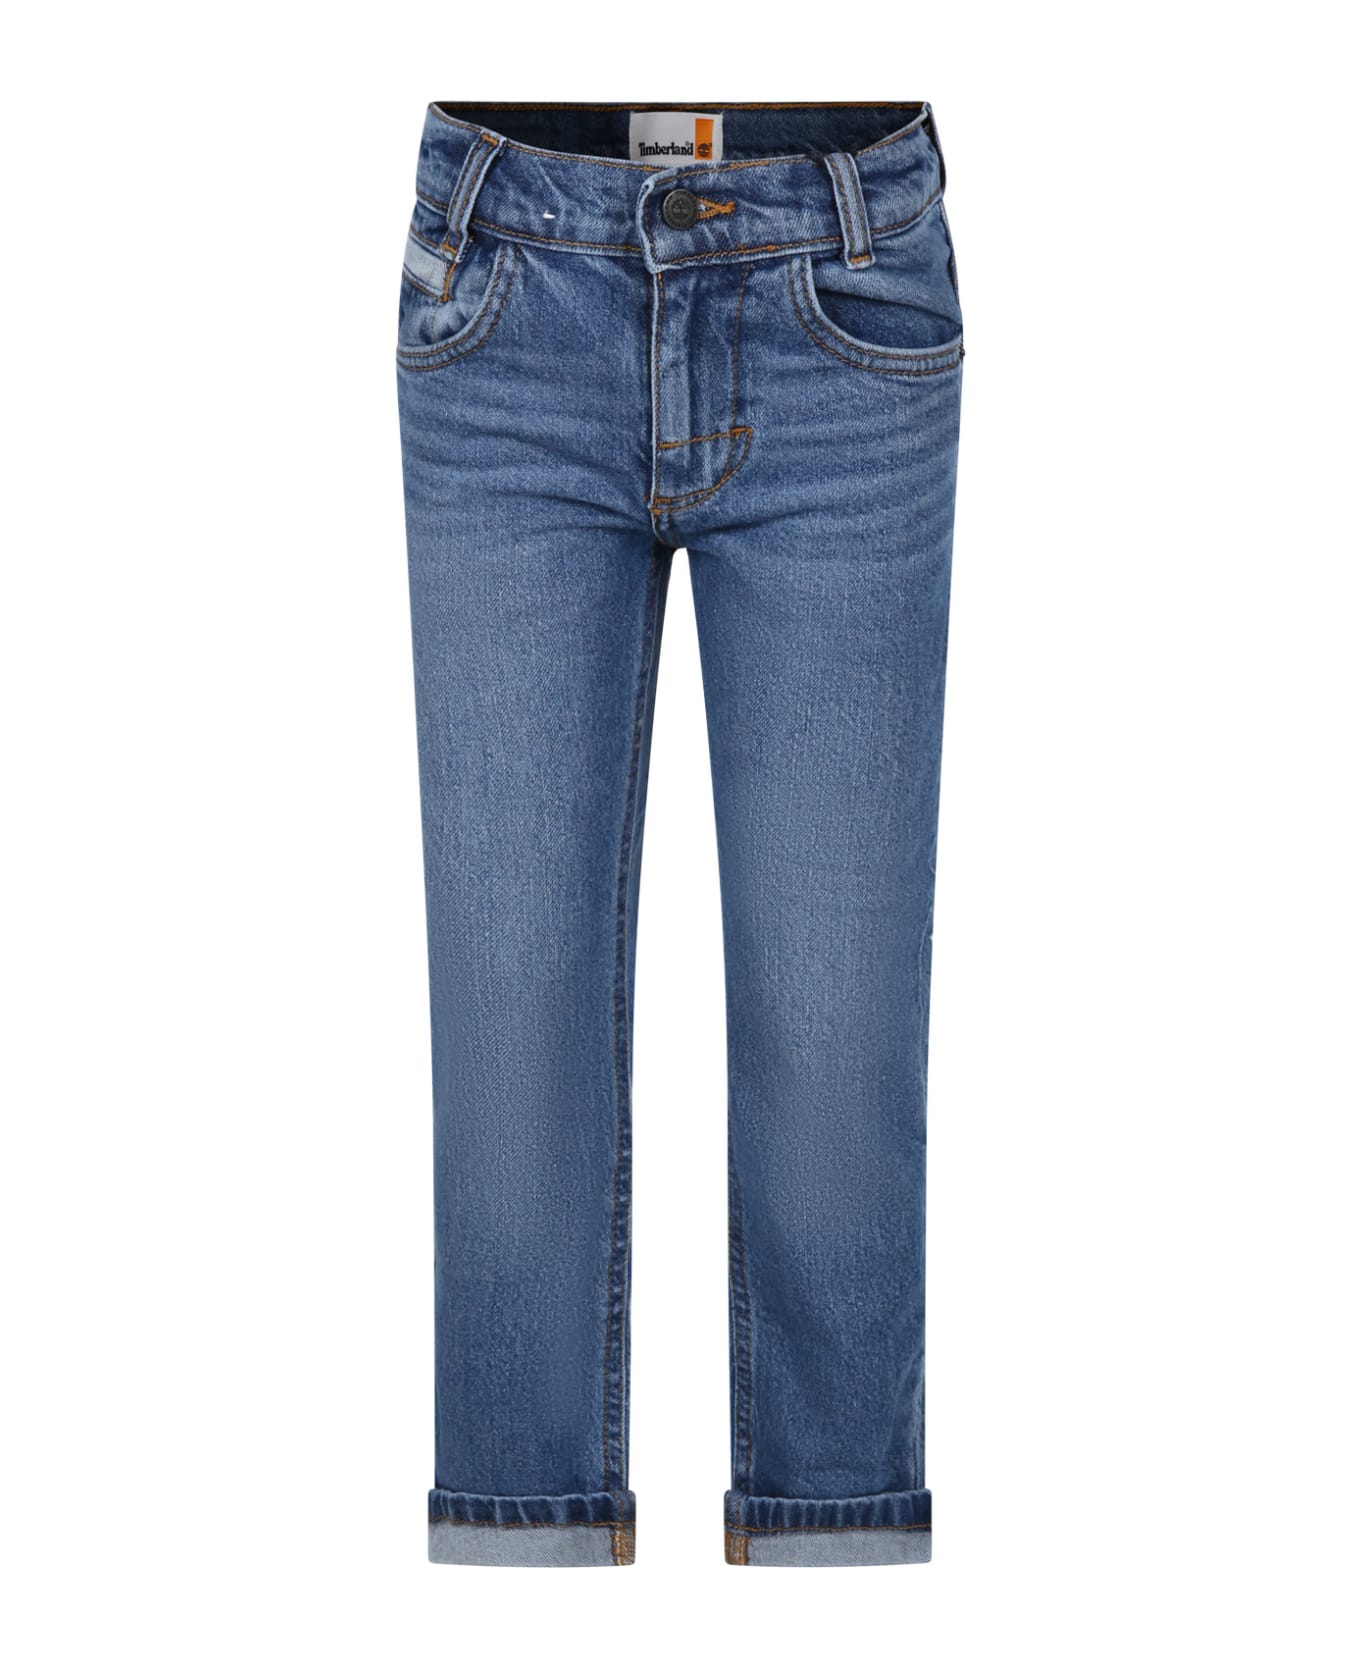 Timberland Denim Jeans For Boy With Logo - Denim ボトムス